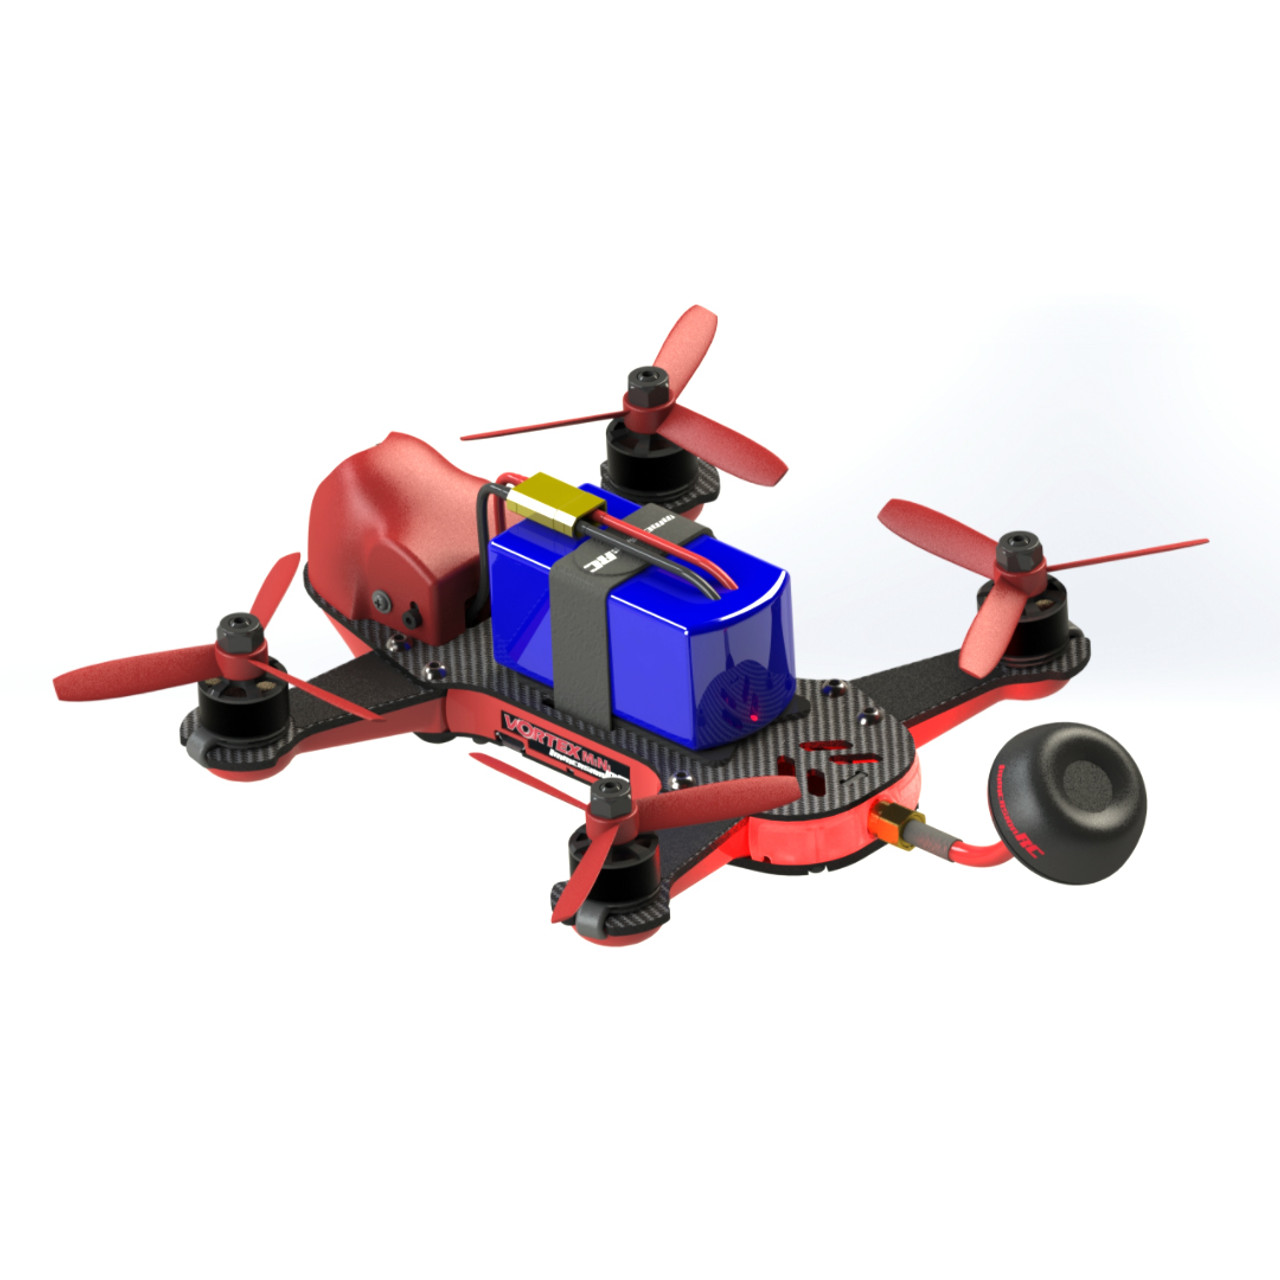 Micro Rc Fpv Racing Drone, Rc Racing Quadcopter